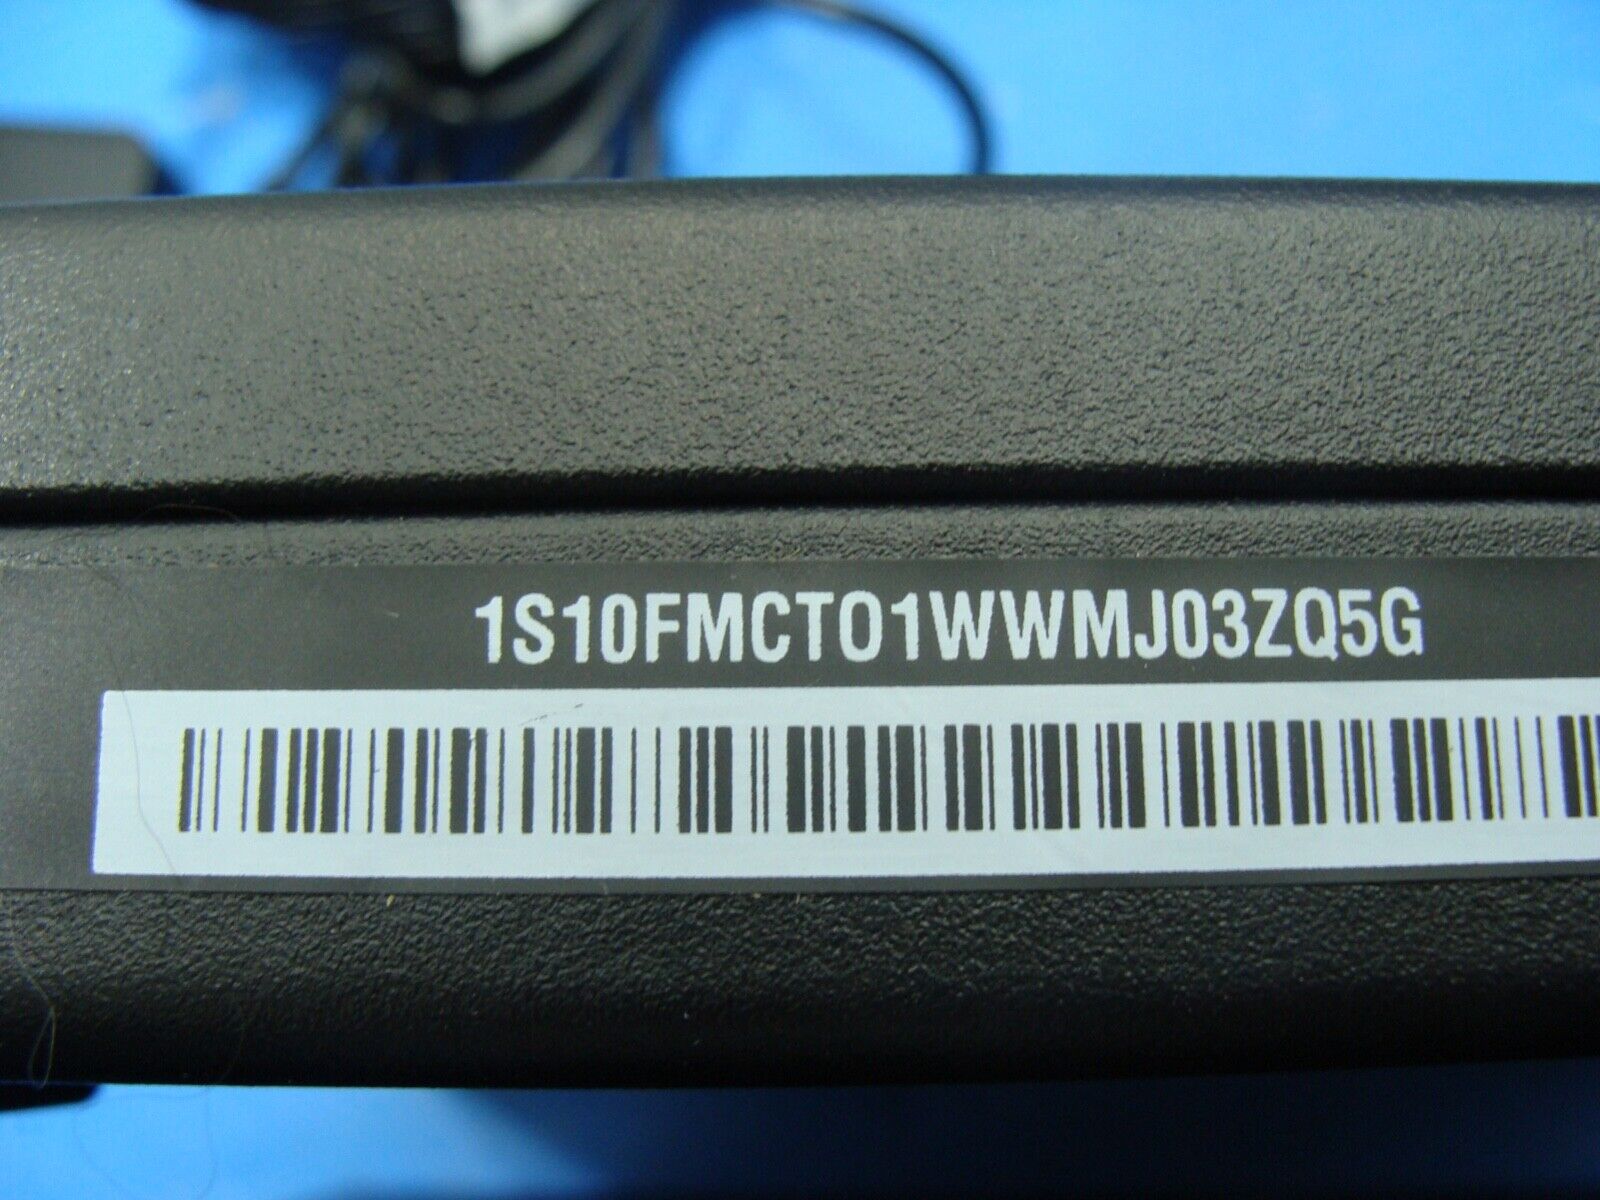 Lot of 2 Lenovo ThinkCentre M900 Tiny Micro Mini PC i5-6500T 8GB RAM 128 GB SSD